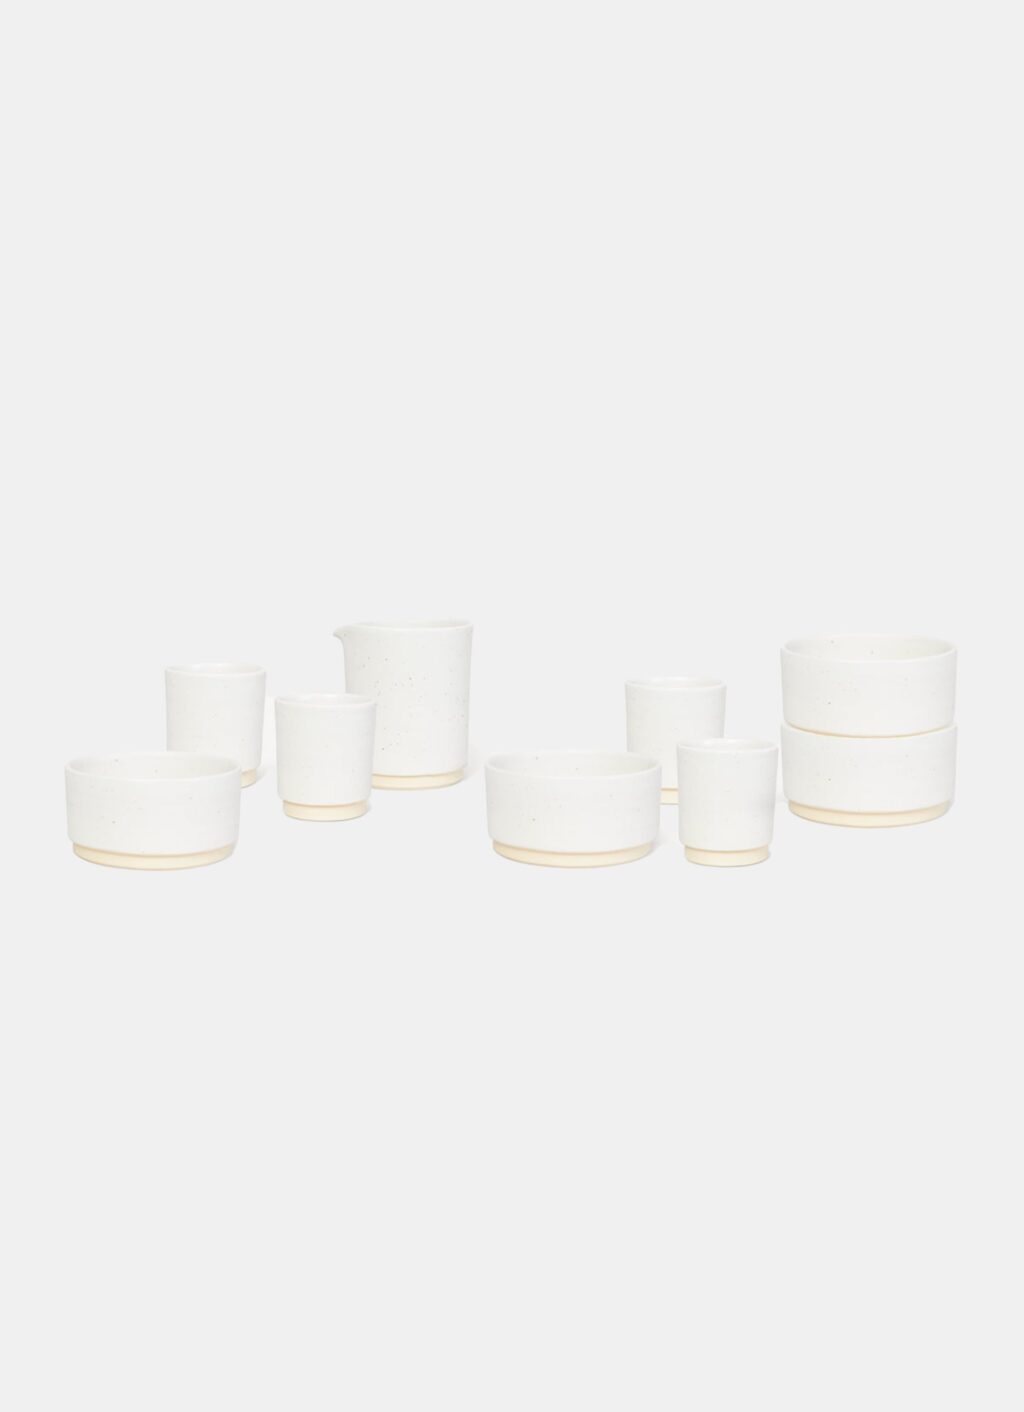 Frama - Otto Ceramic Breakfast Set - White